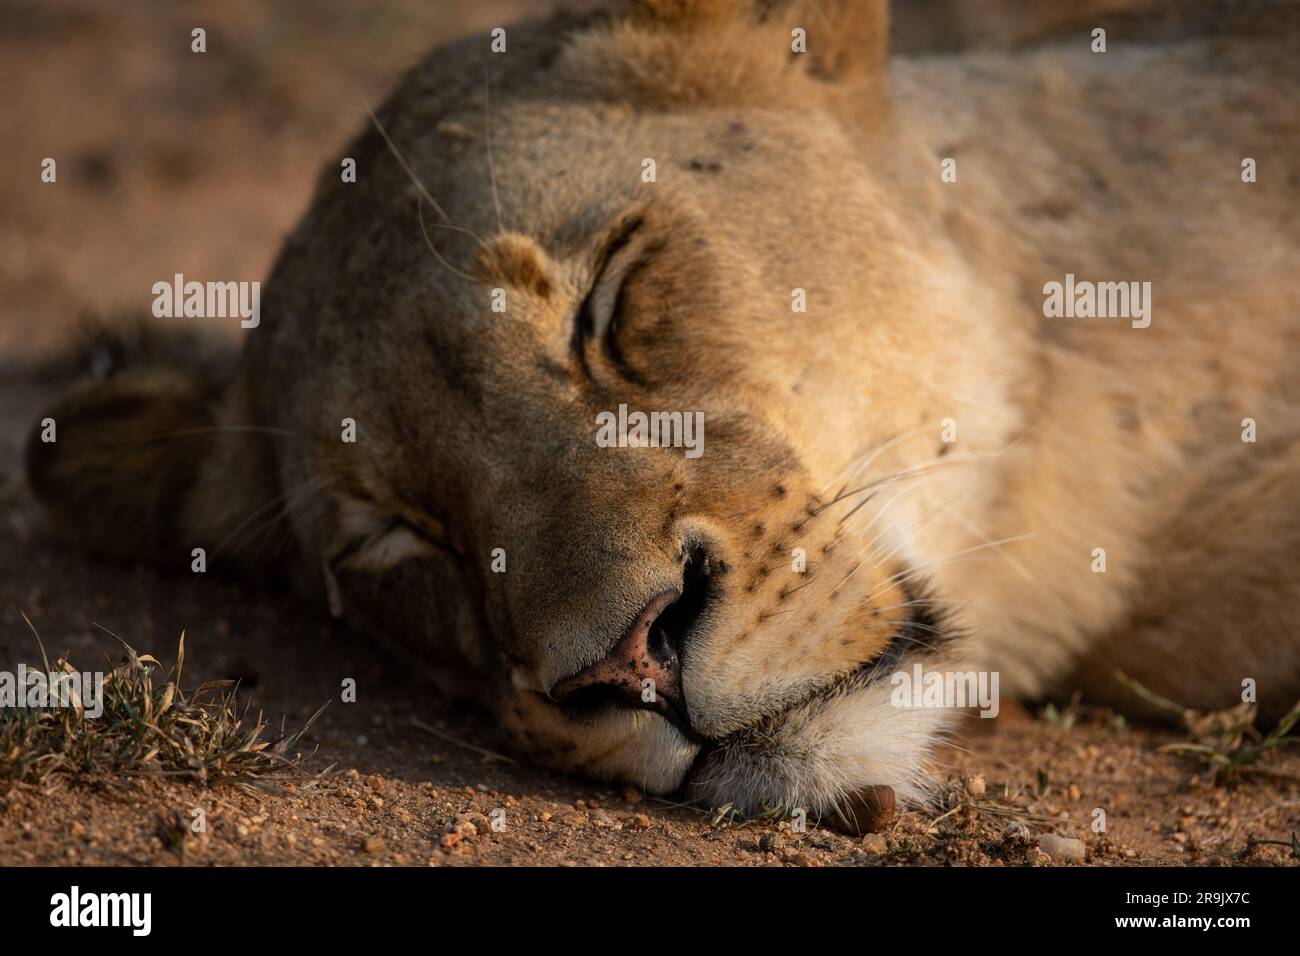 A close-up of a lioness, Panthera leo, sleeping. Stock Photo